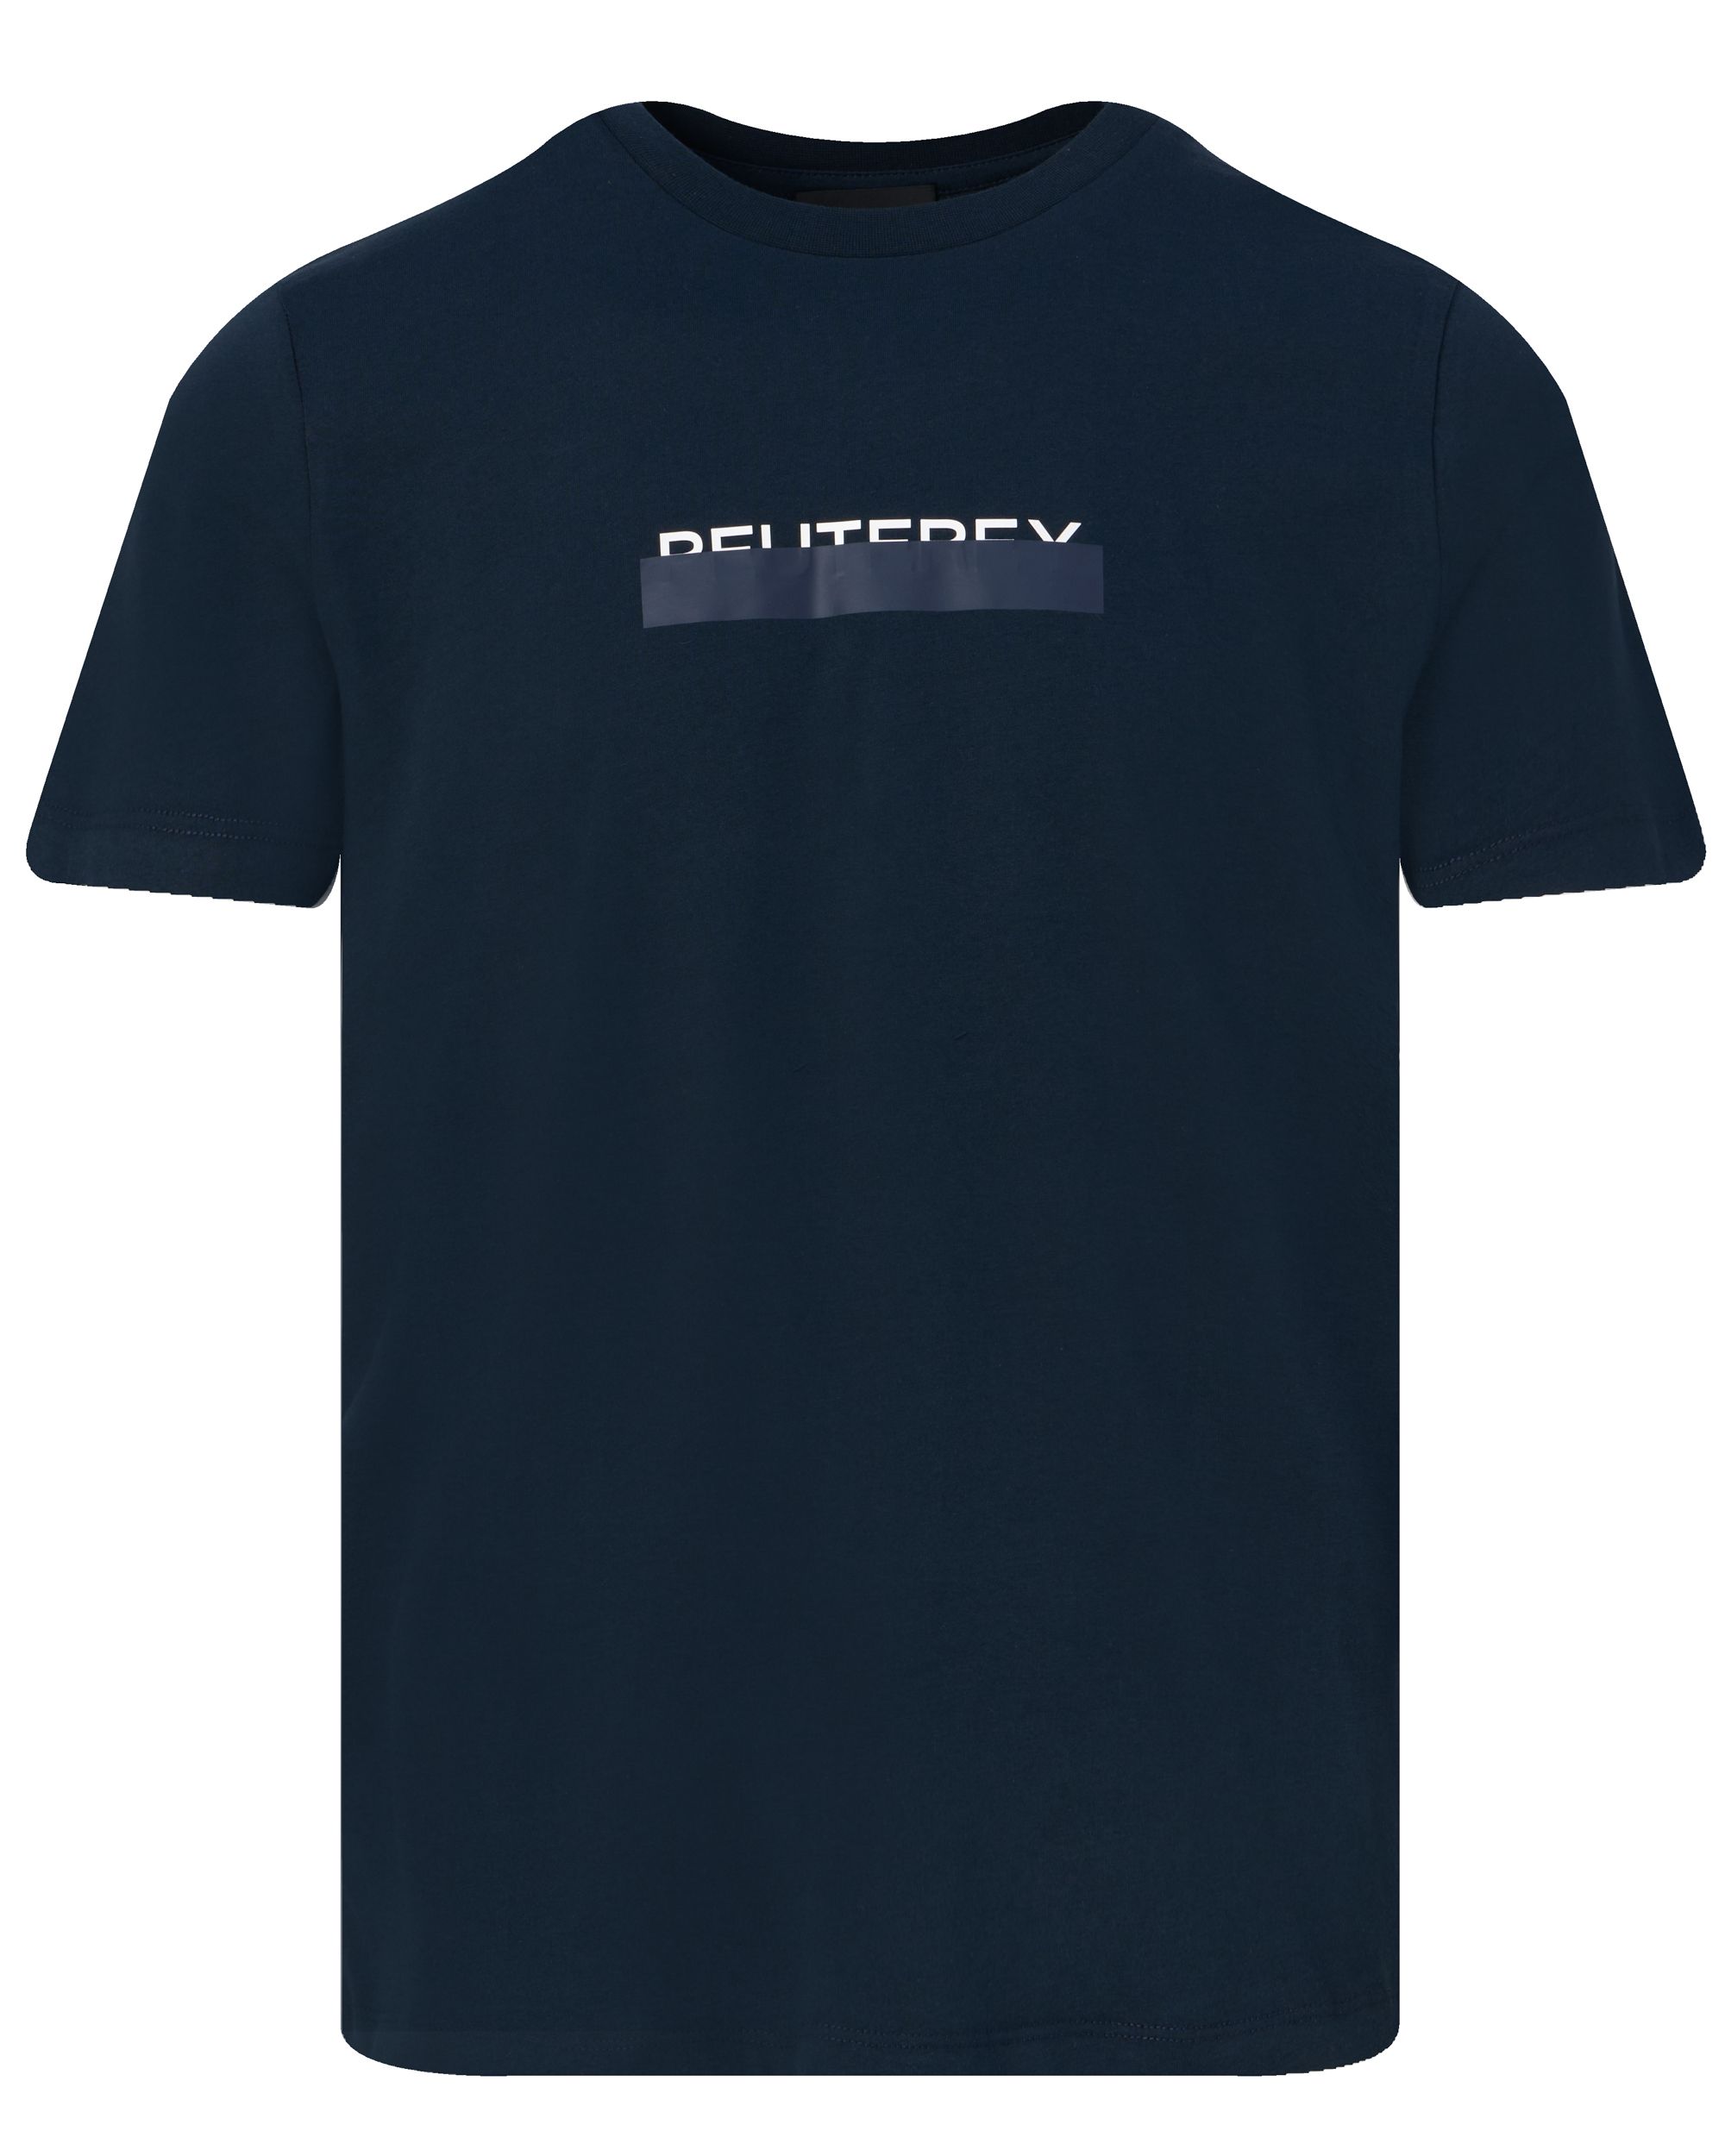 Peuterey Manderly T-shirt KM Donker blauw 094274-001-L